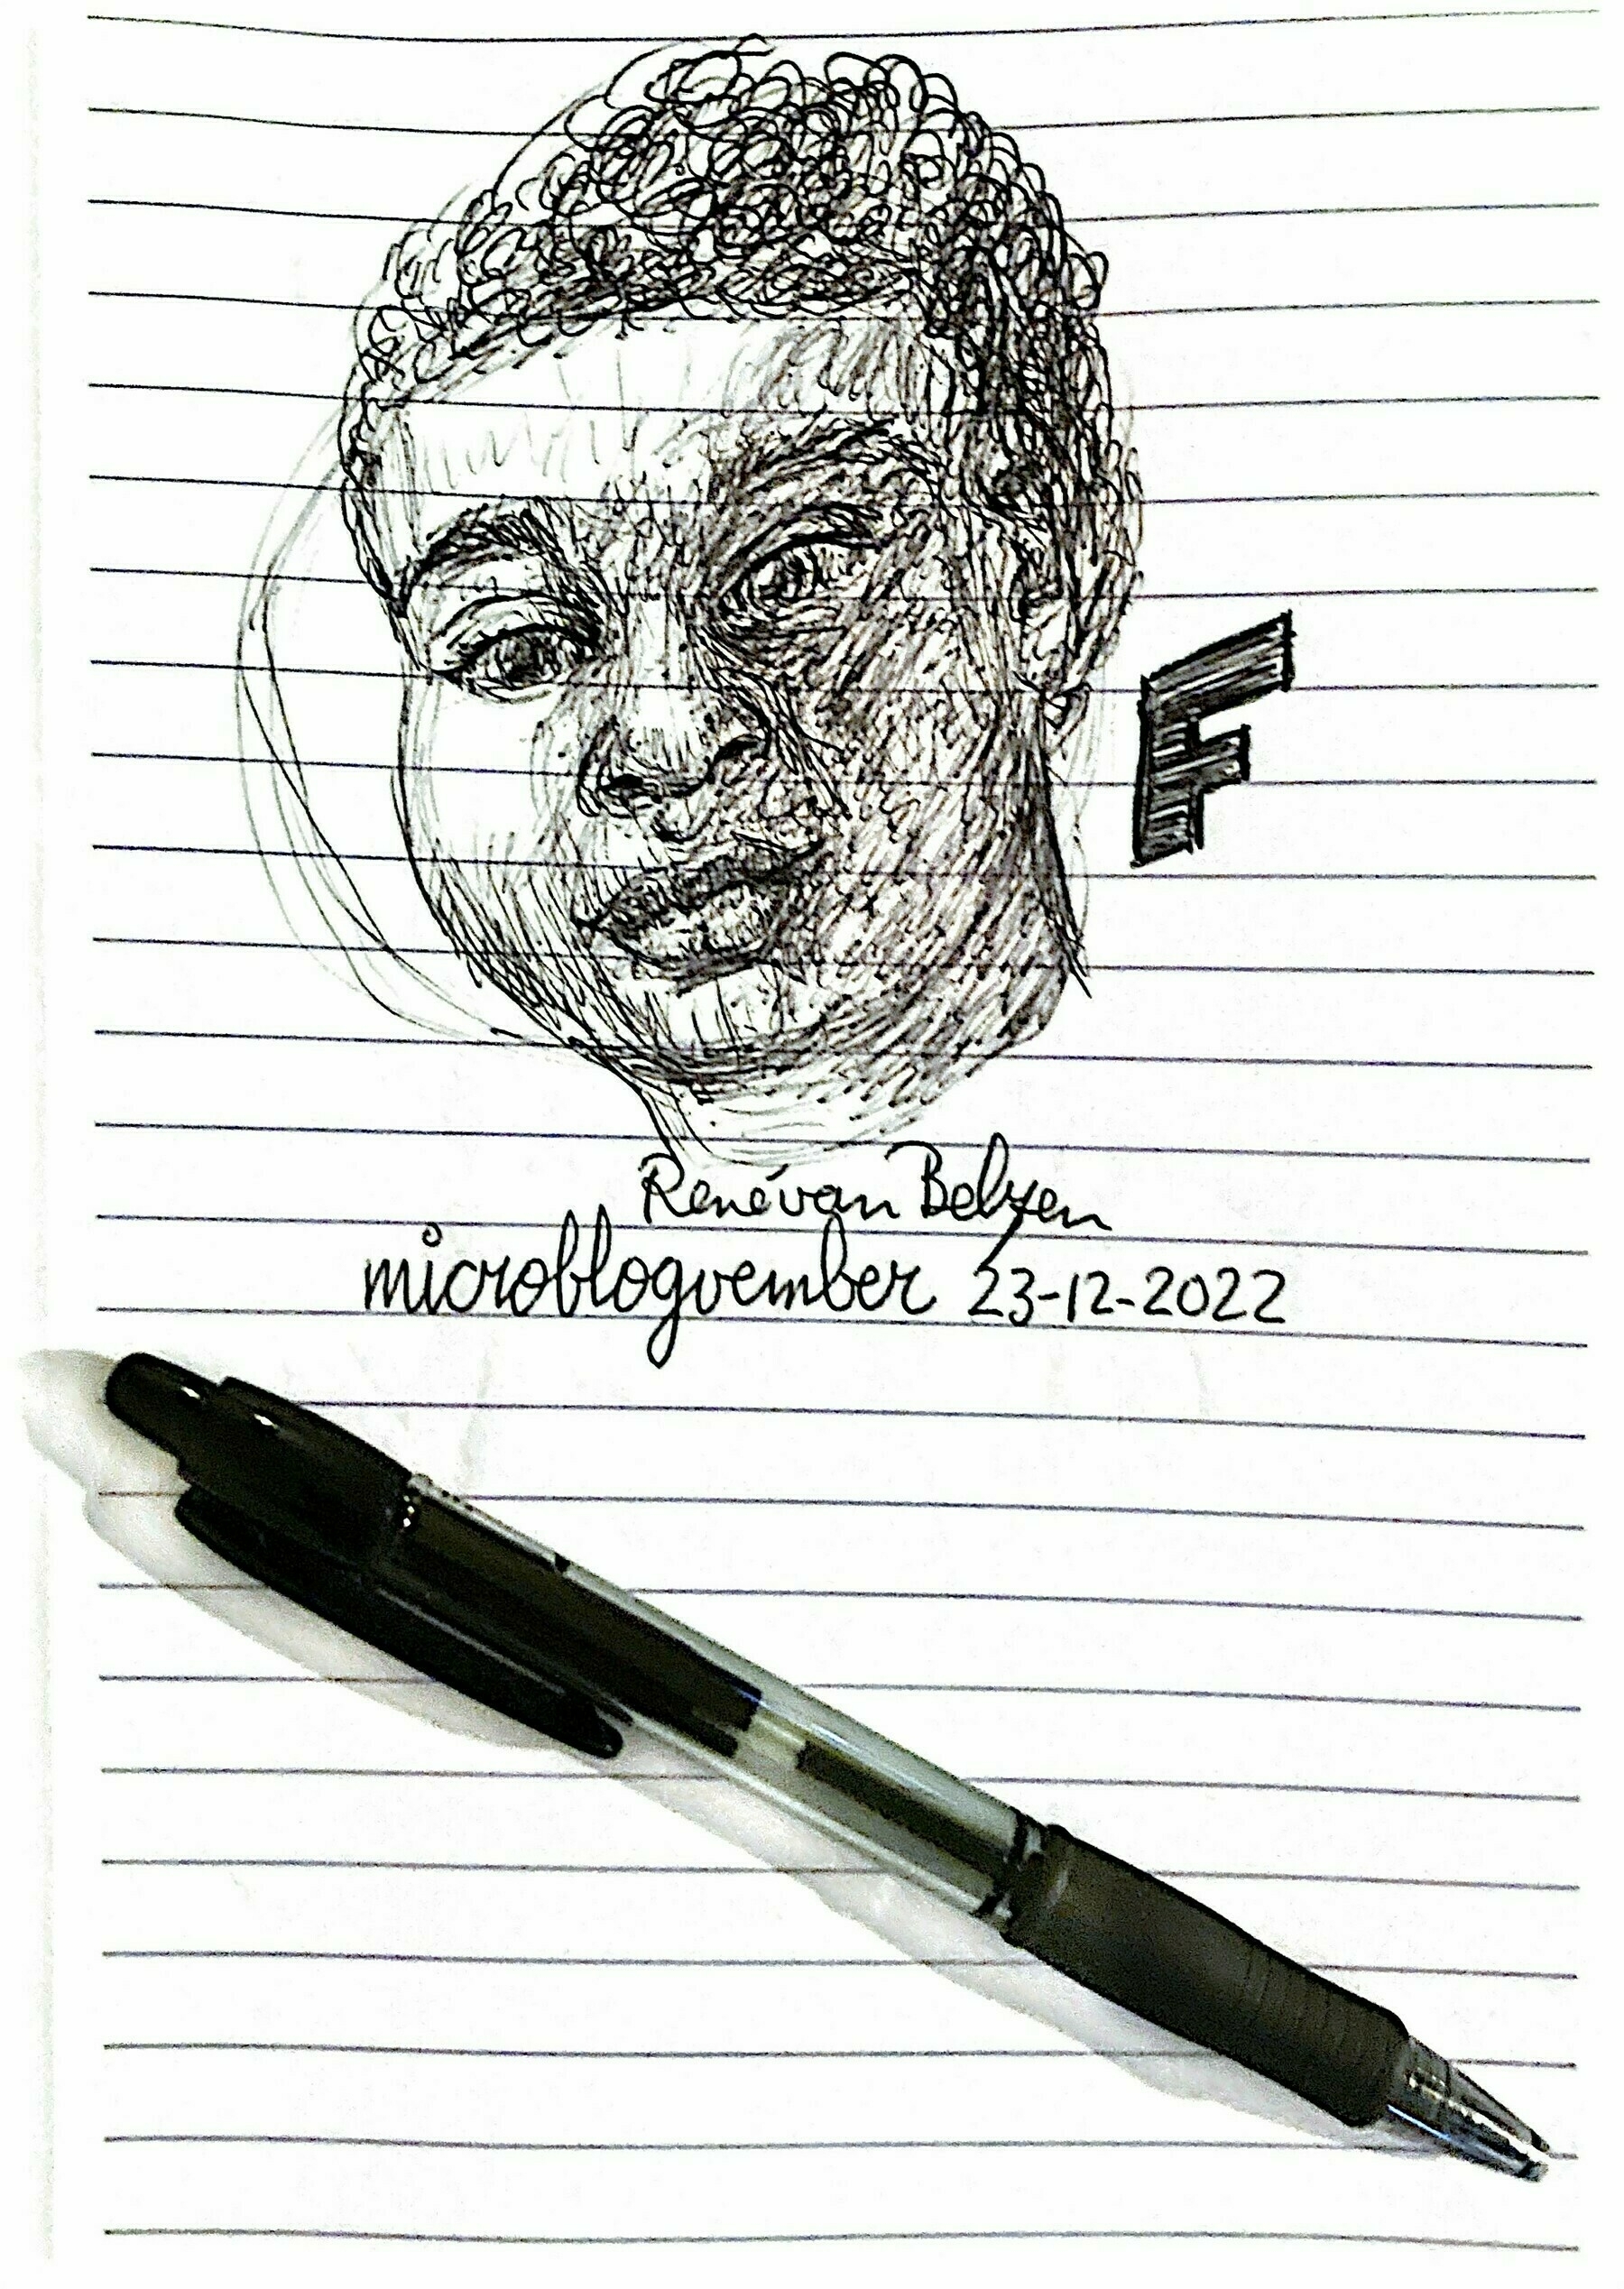 ballpoint pen drawing of a portrait that deserves an F